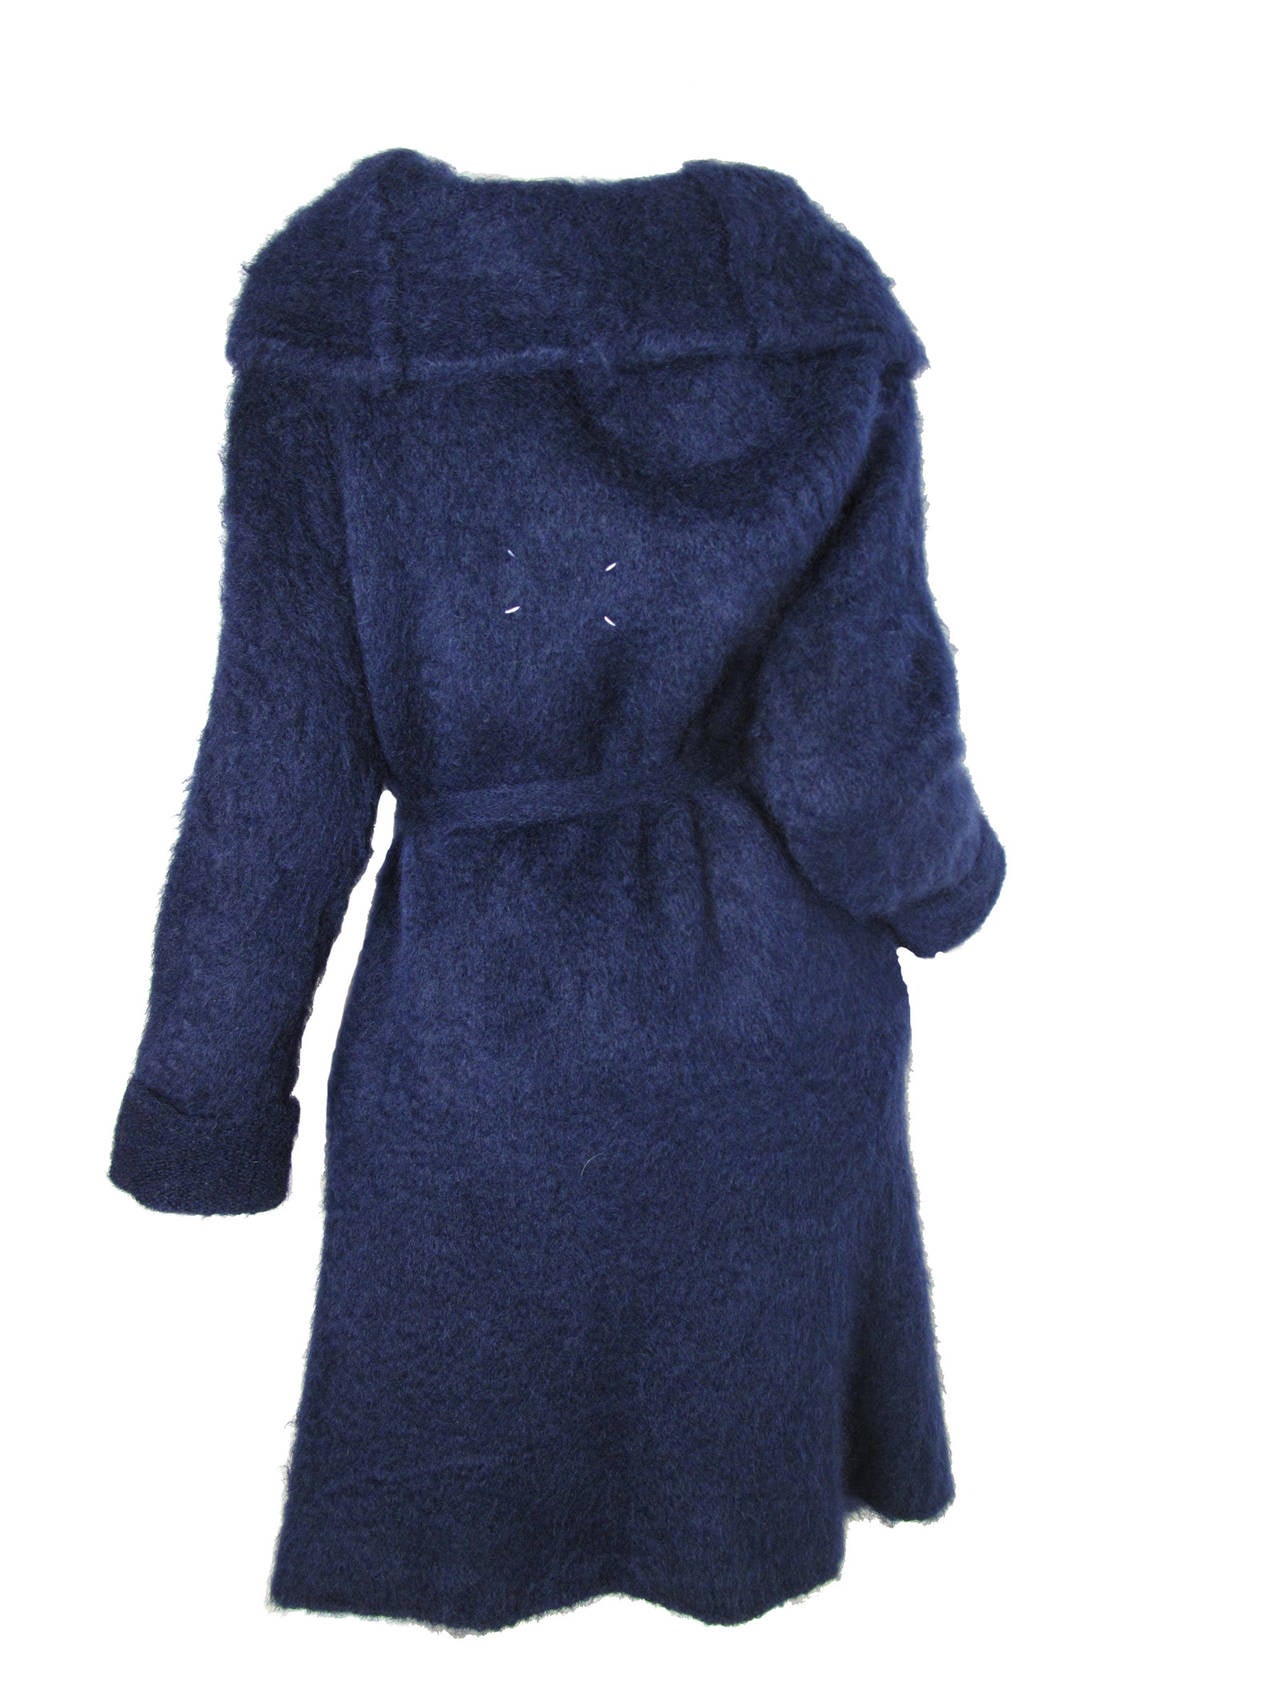 Women's Martin Margiela Navy Blue Mohair Oversized Sweater Coat - Never worn